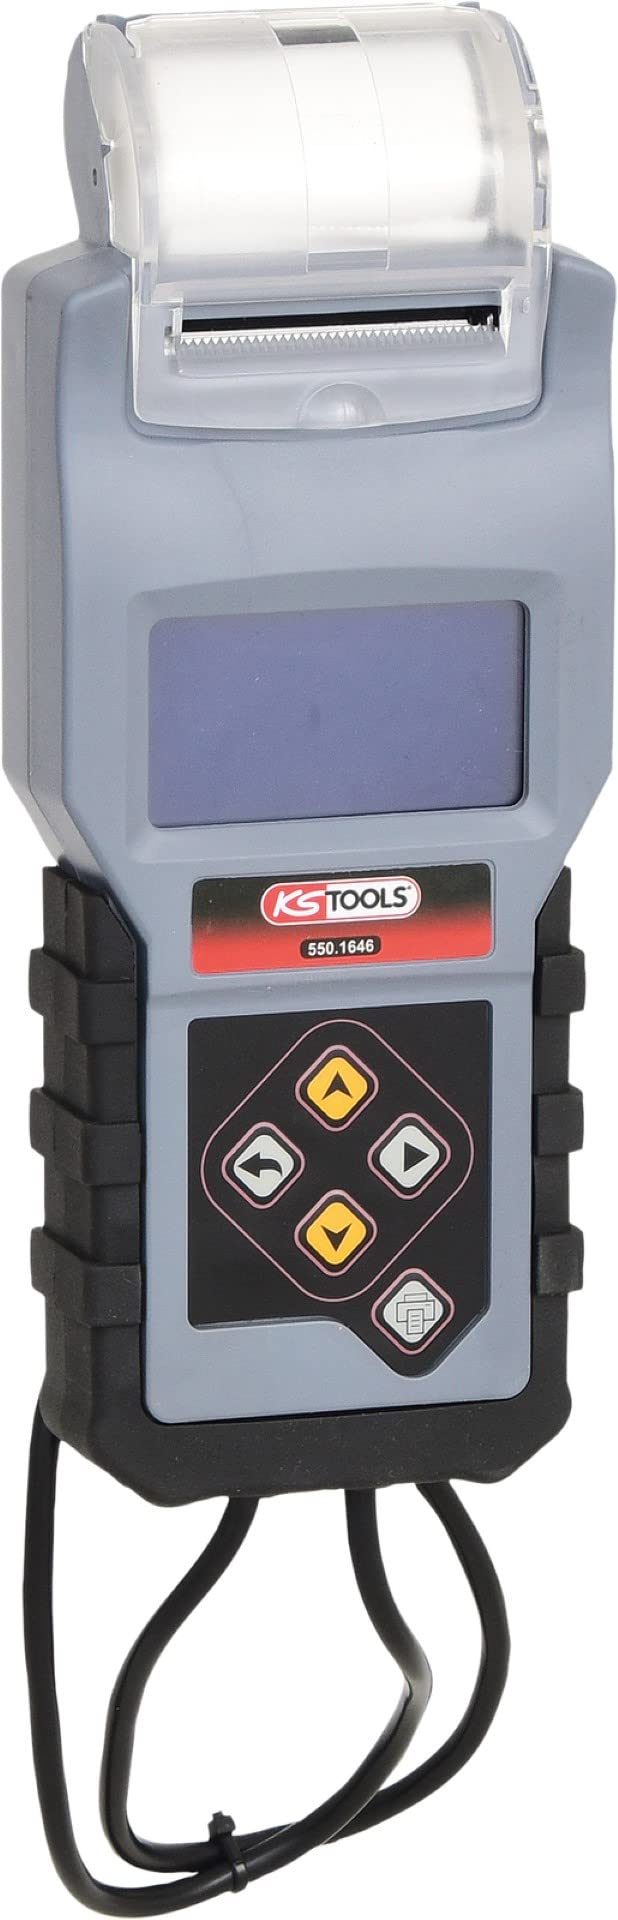 KS Tools 550.1646 12V Digital-Batterie- und Ladesystemtester mit integriertem Drucker von KS Tools